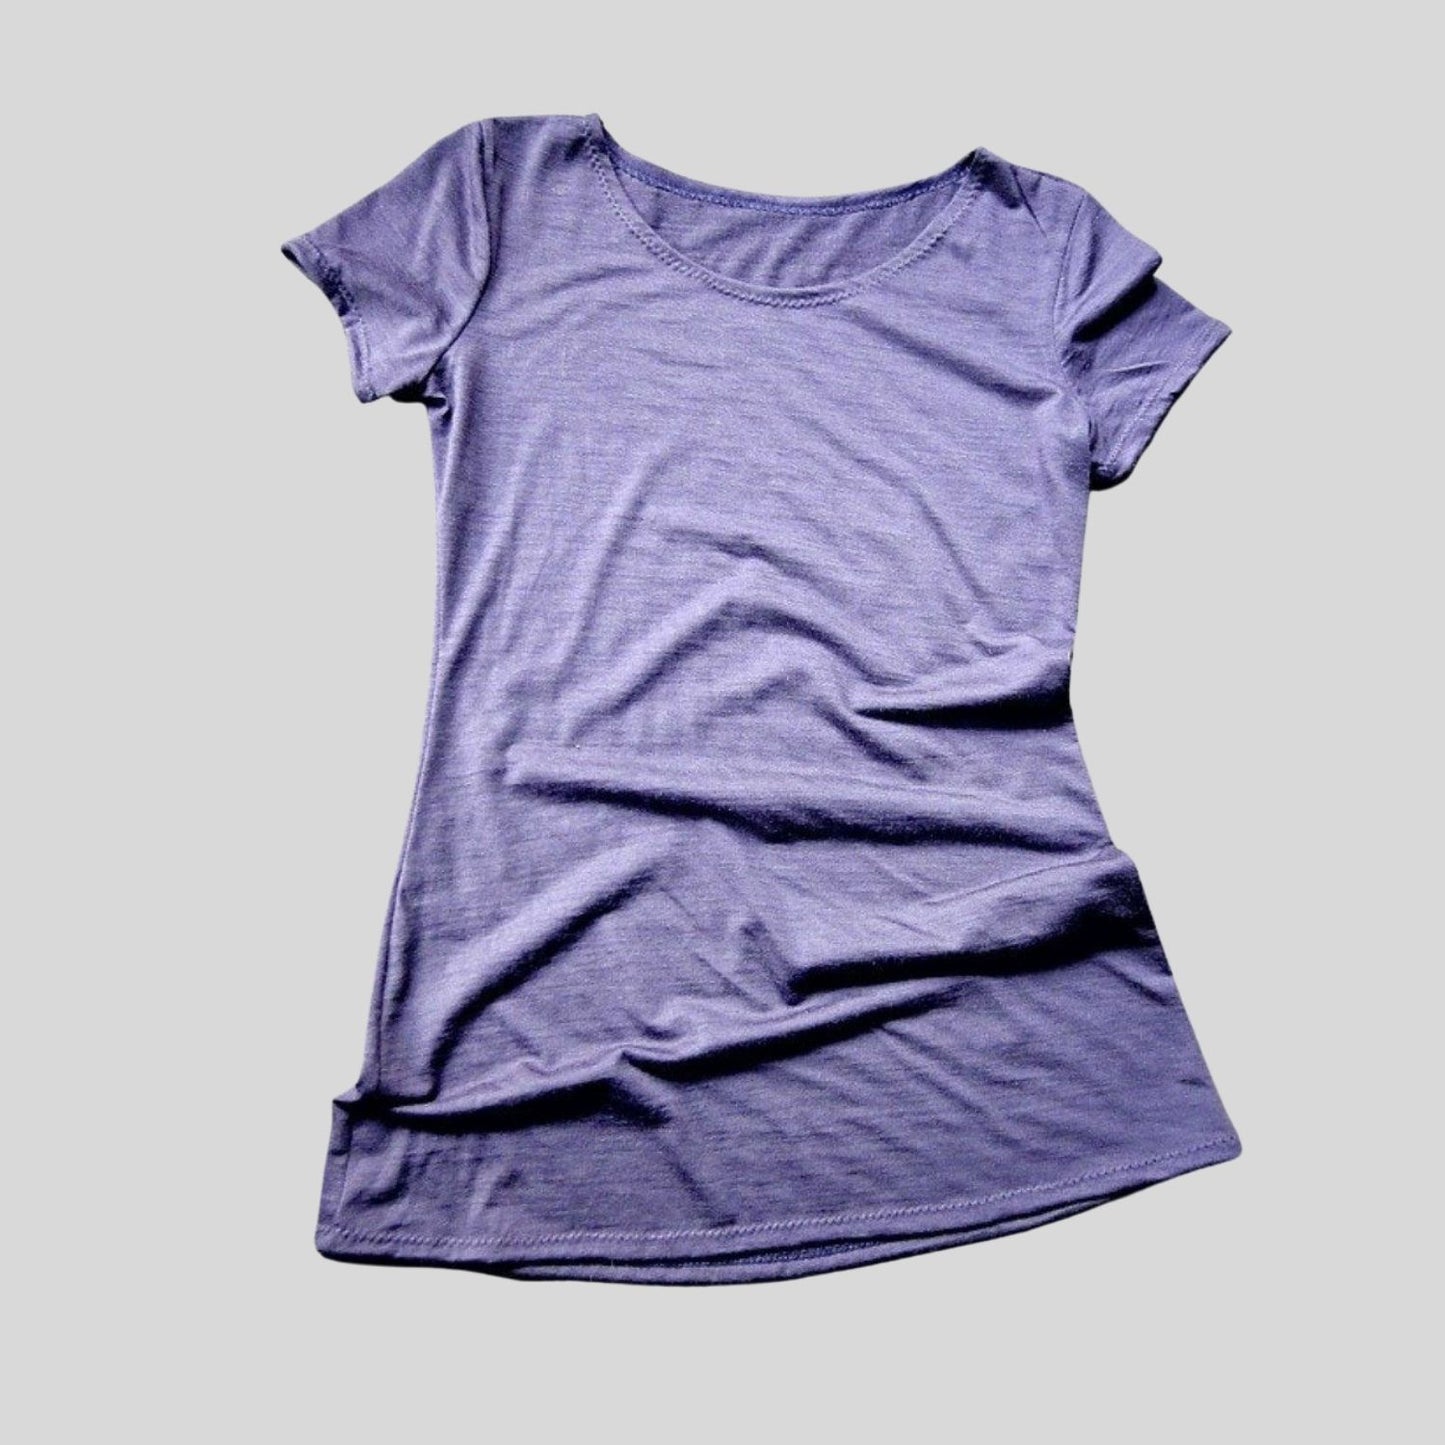 purple wool tshirt | Long top in merino wool | Made in Canada merino wool + organic cotton tops and tee shirts for women | Econica